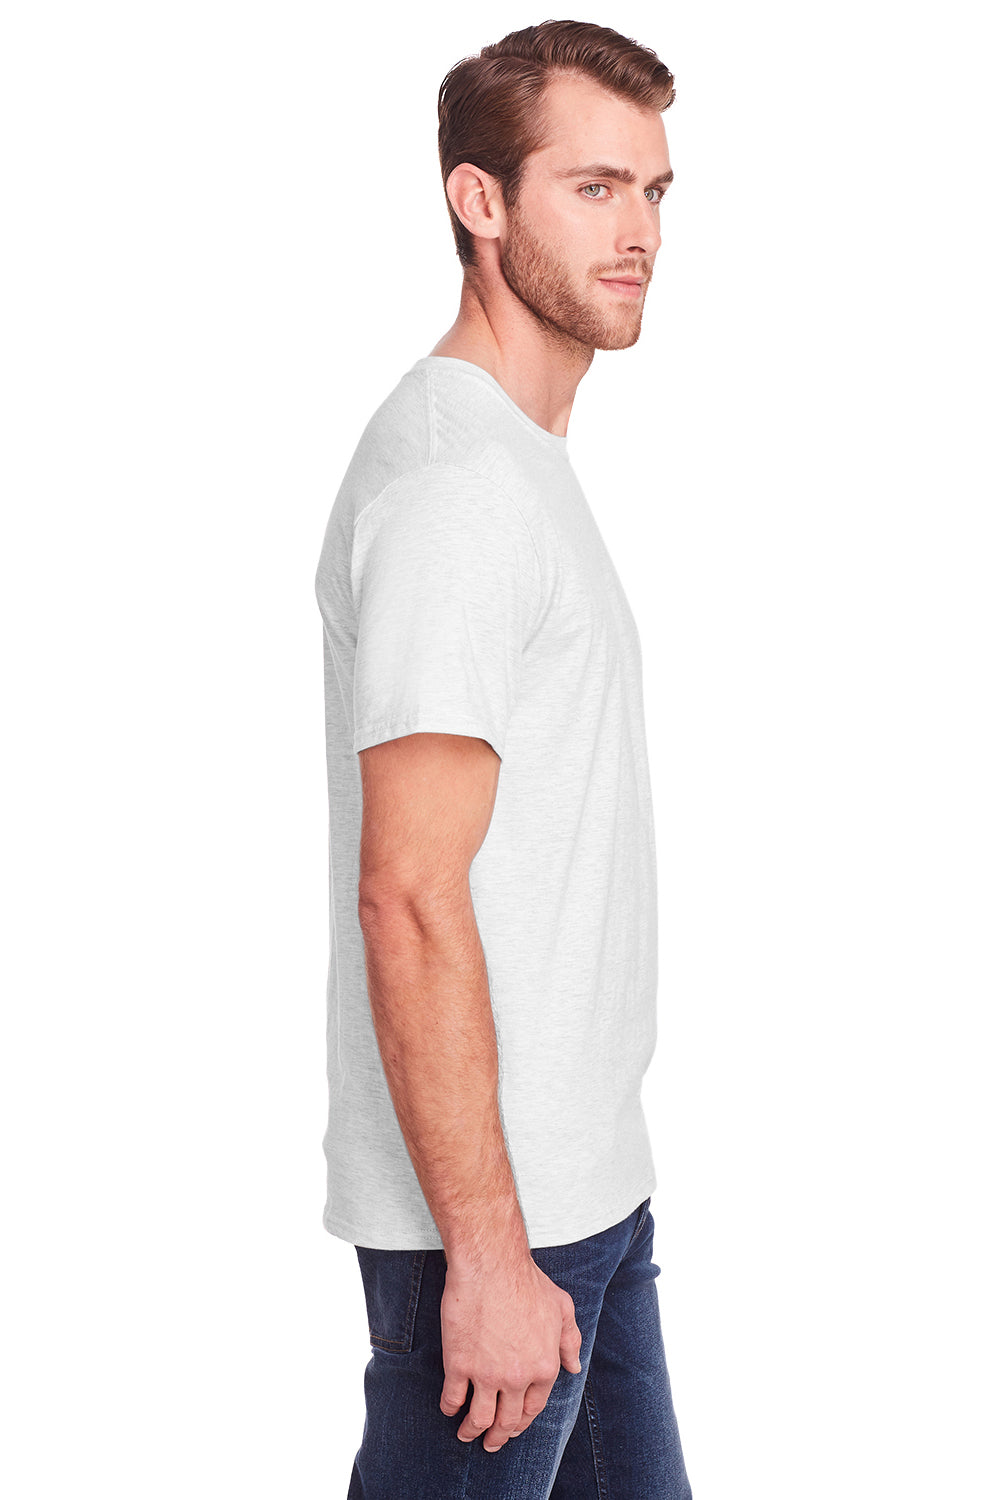 Fruit Of The Loom IC47MR Mens Iconic Short Sleeve Crewneck T-Shirt White Side